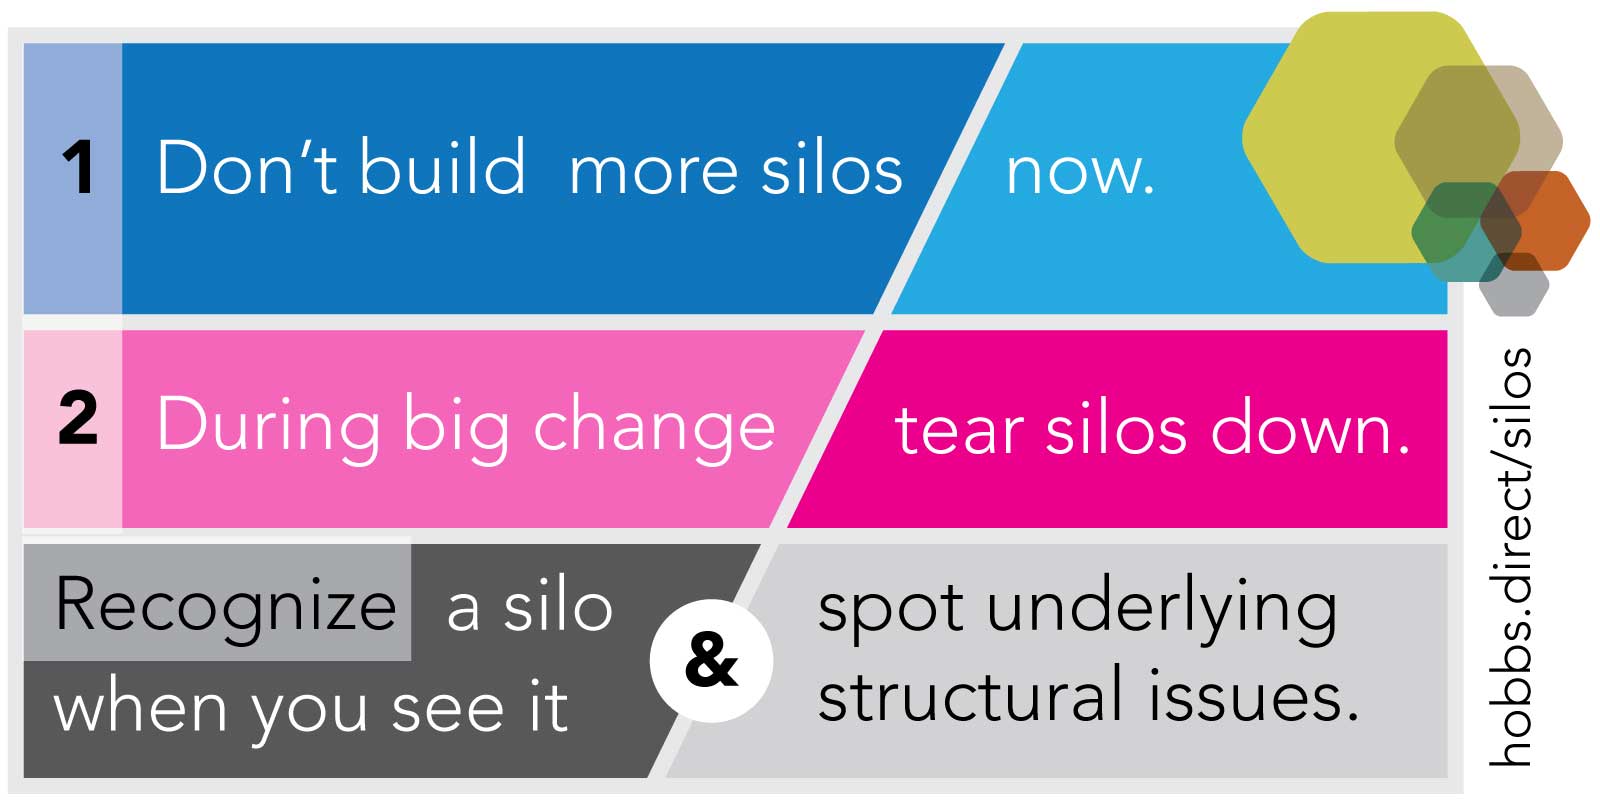 Right now, don't build more silos. When you make big changes, break silos down.